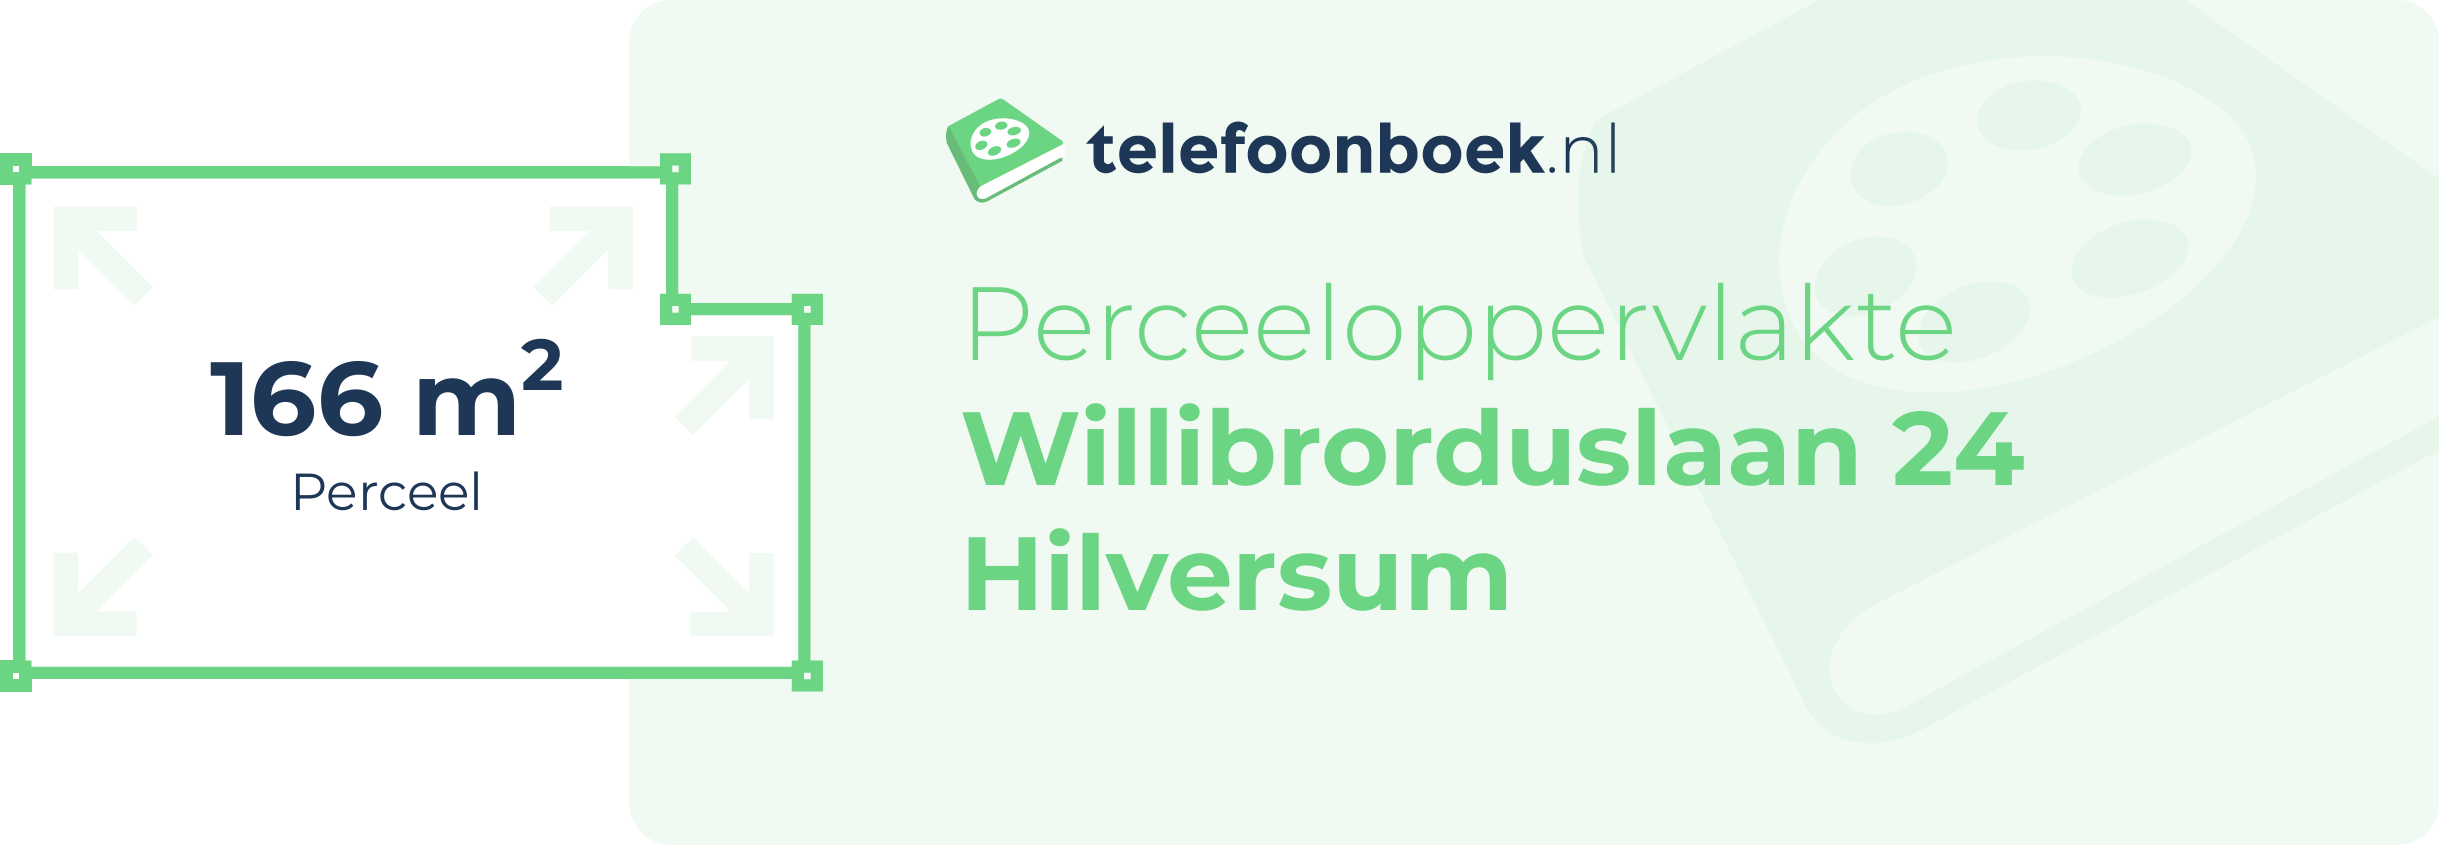 Perceeloppervlakte Willibrorduslaan 24 Hilversum